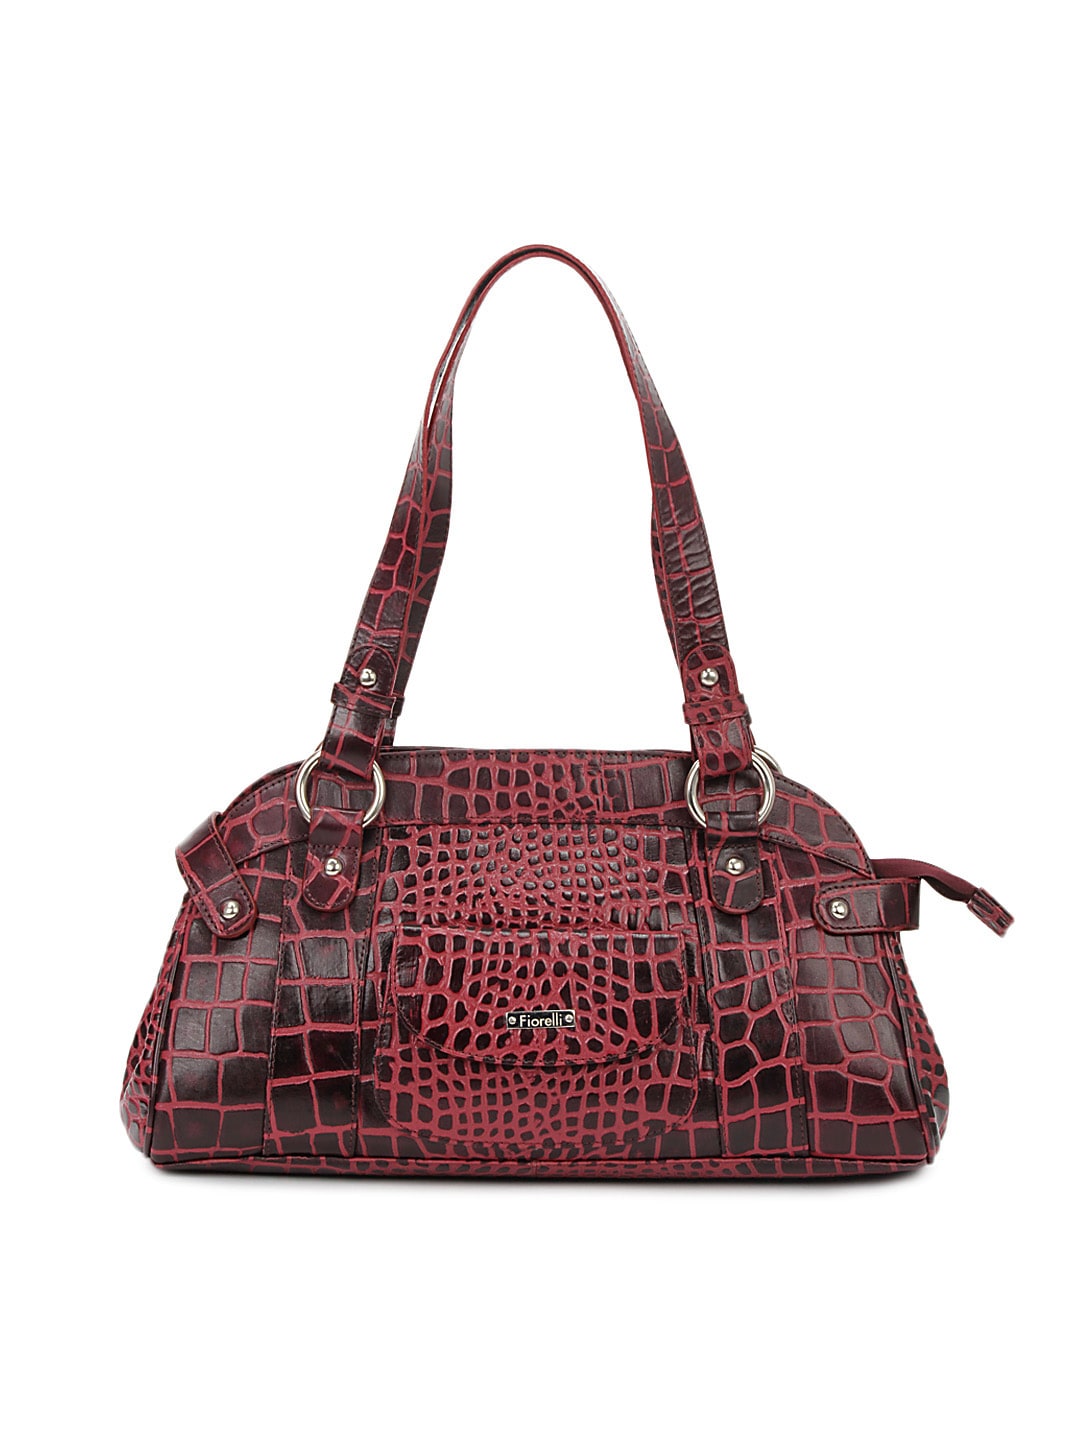 Fiorelli Women Red Leather Handbag